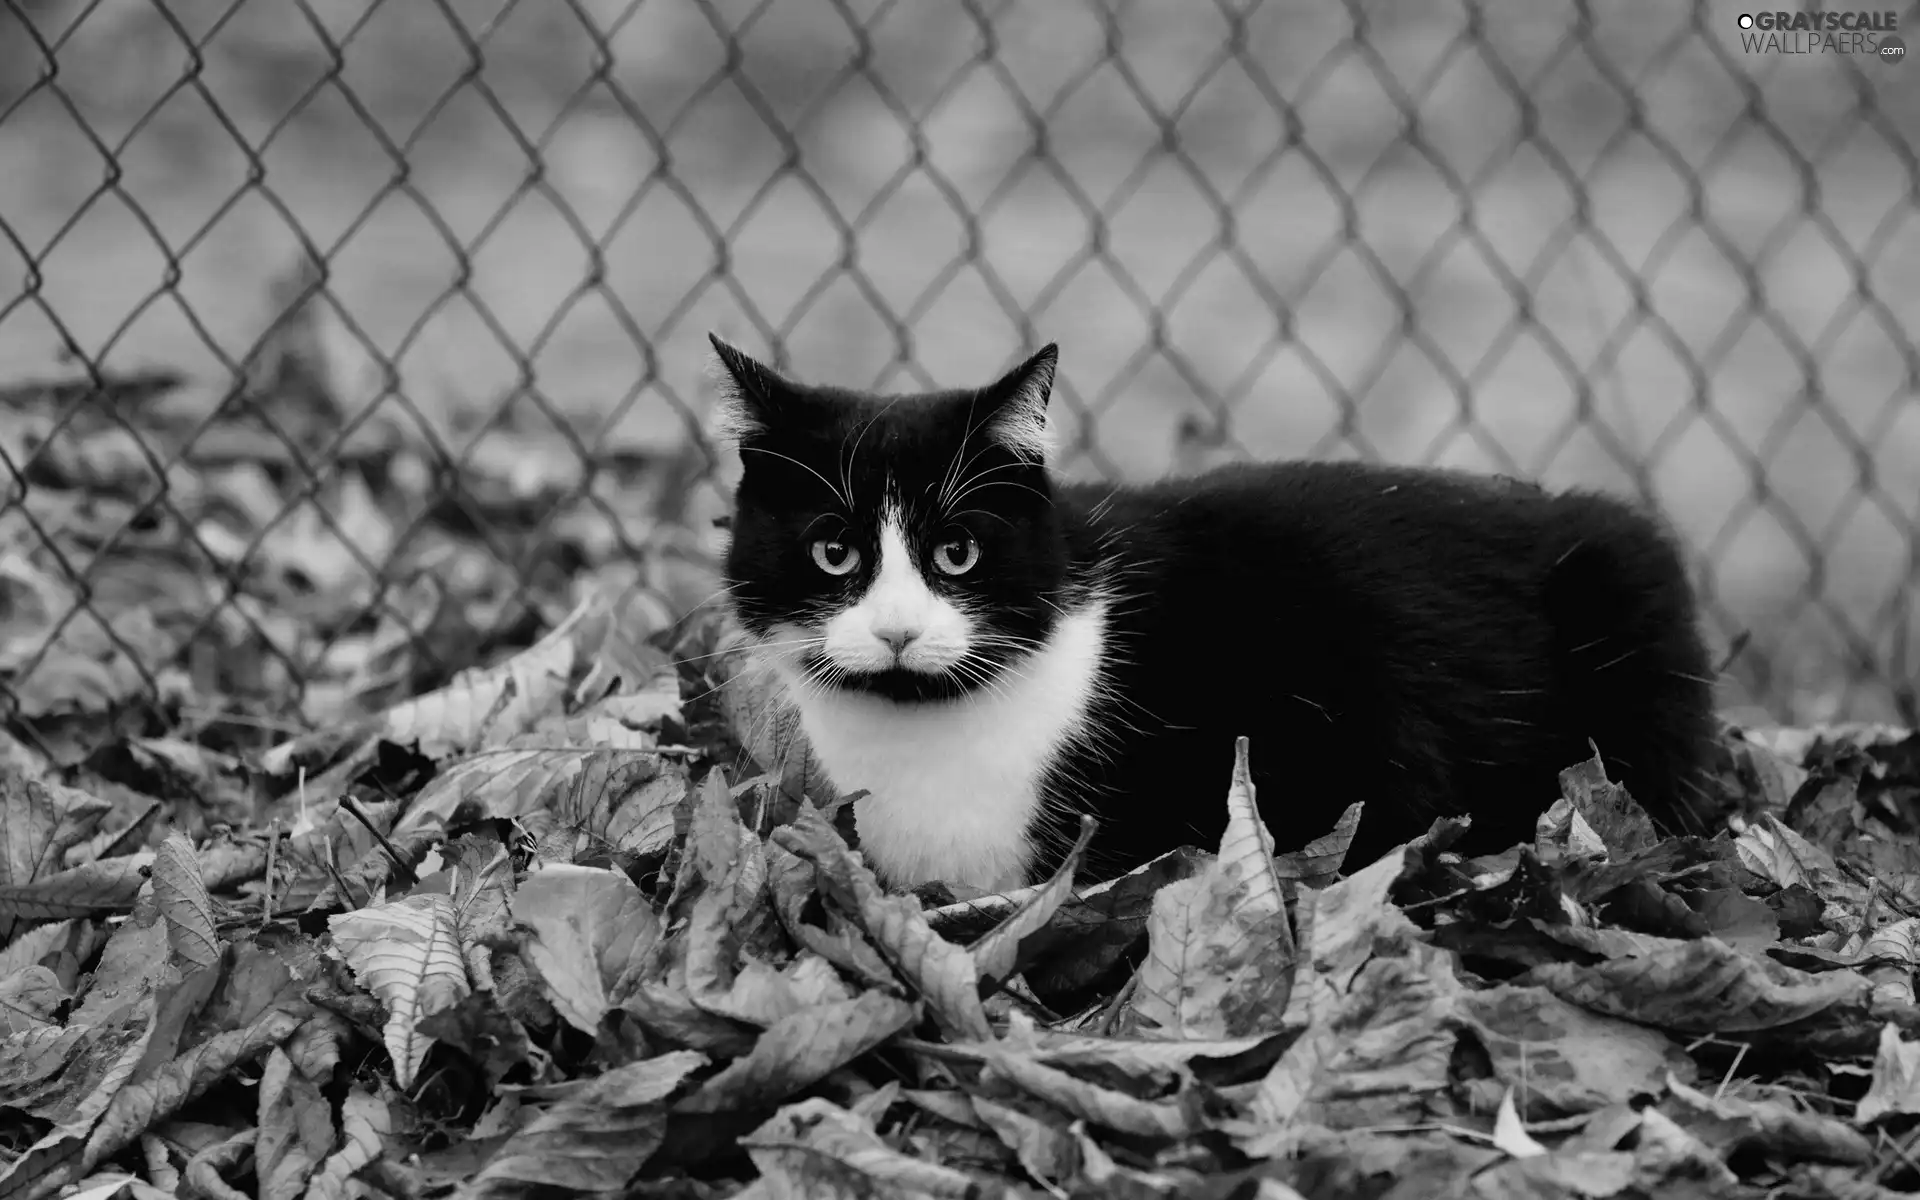 Leaf, fence, cat, Autumn, Black